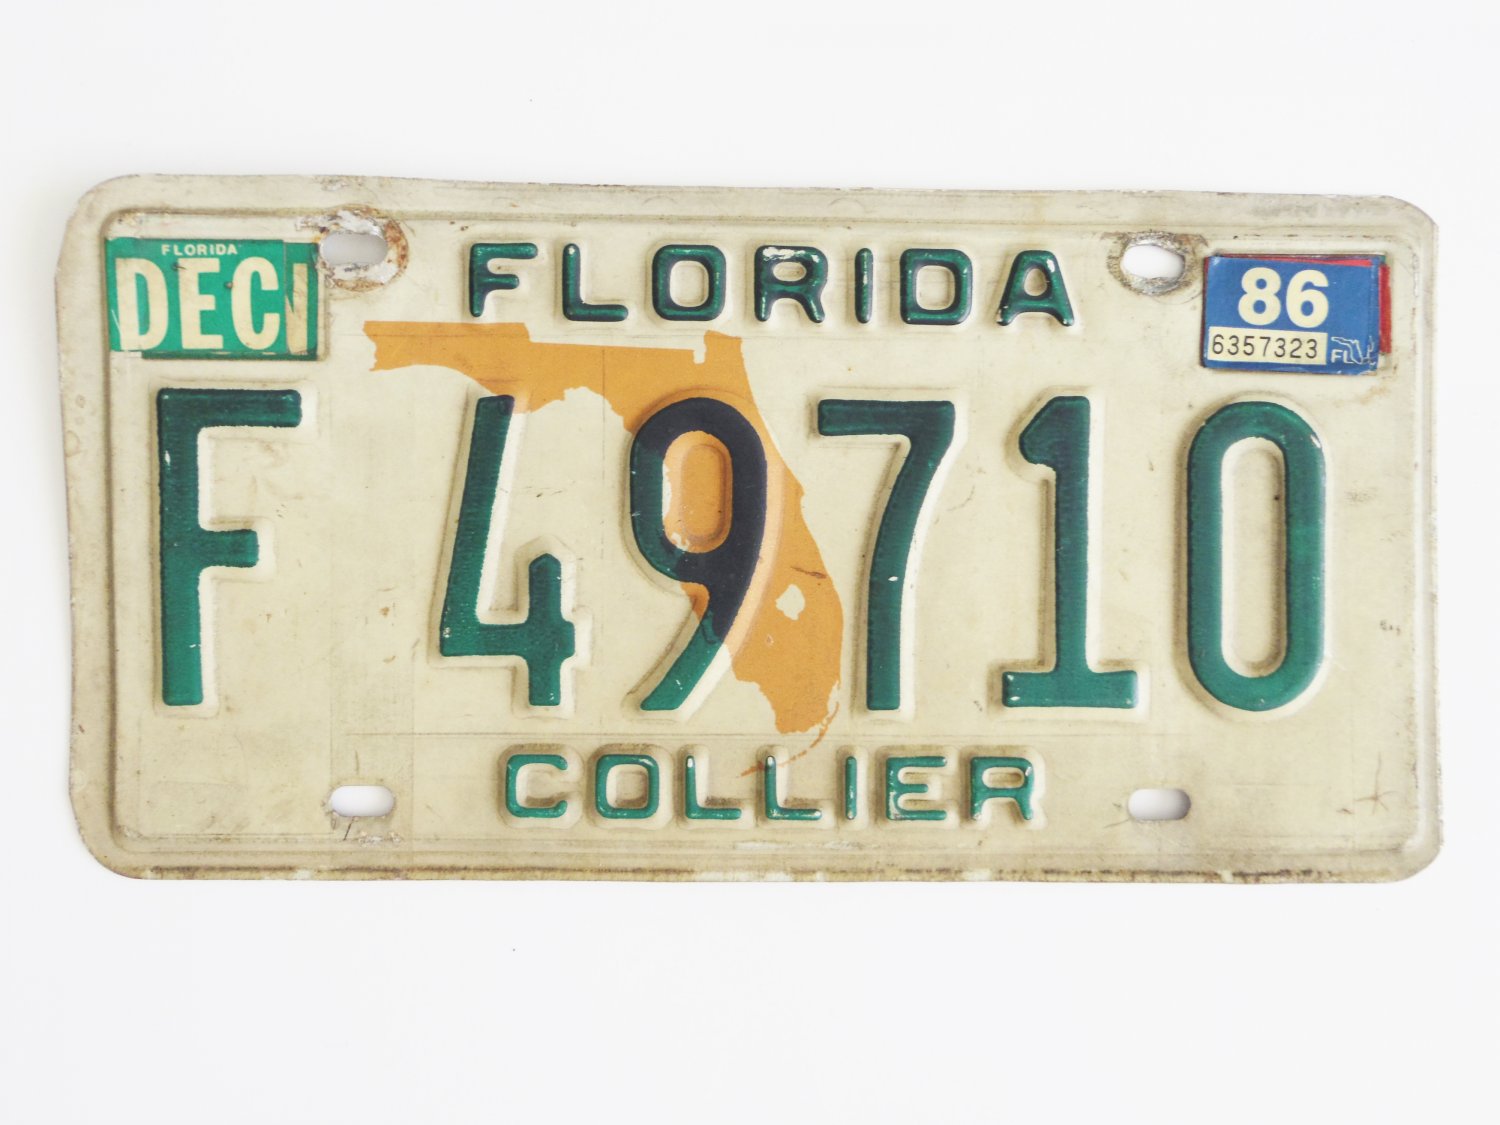 free florida license plate lookup